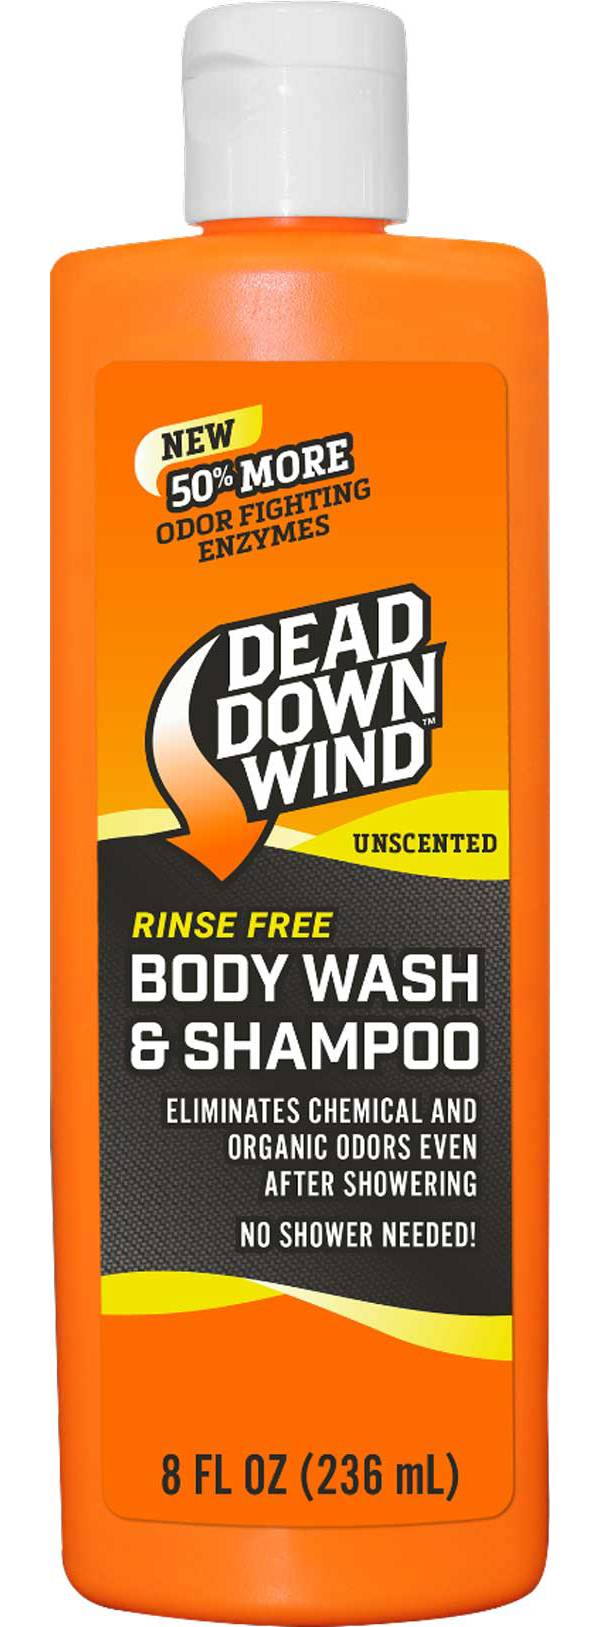 BaseCamp Rinse Free Body Wash and Shampoo product image